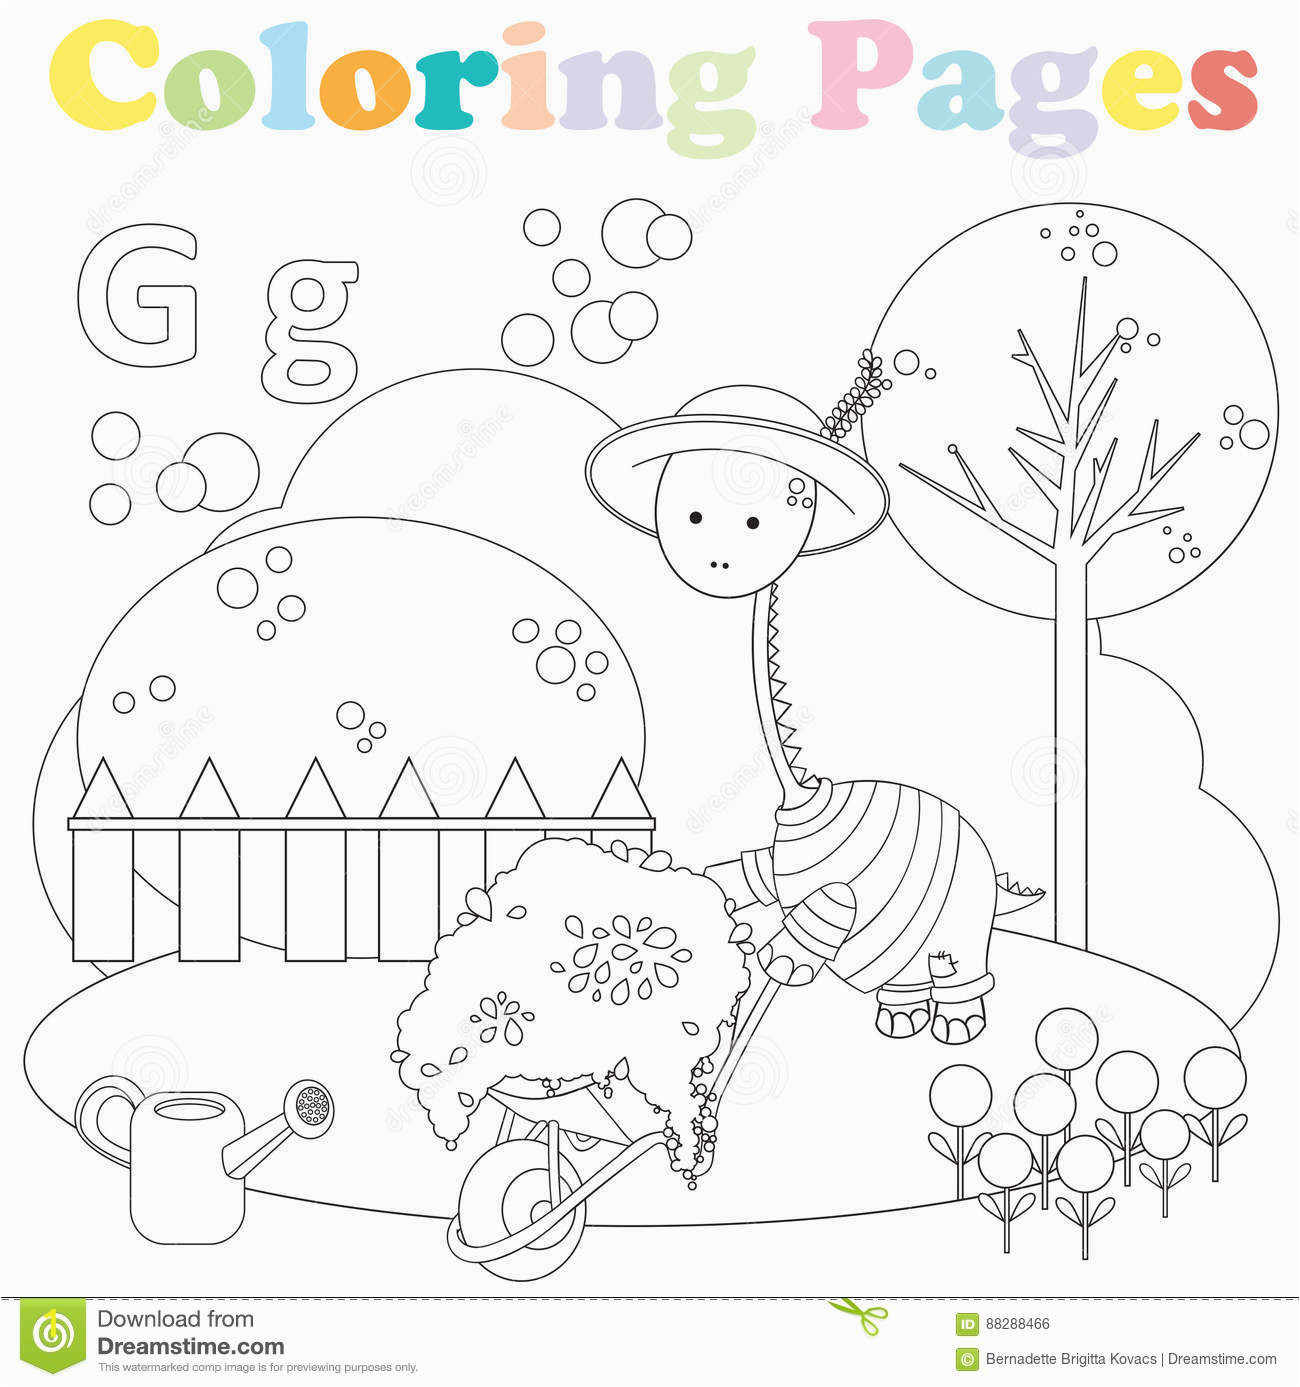 coloring page kids alphabet set letter g cute dinosaur yard gardening